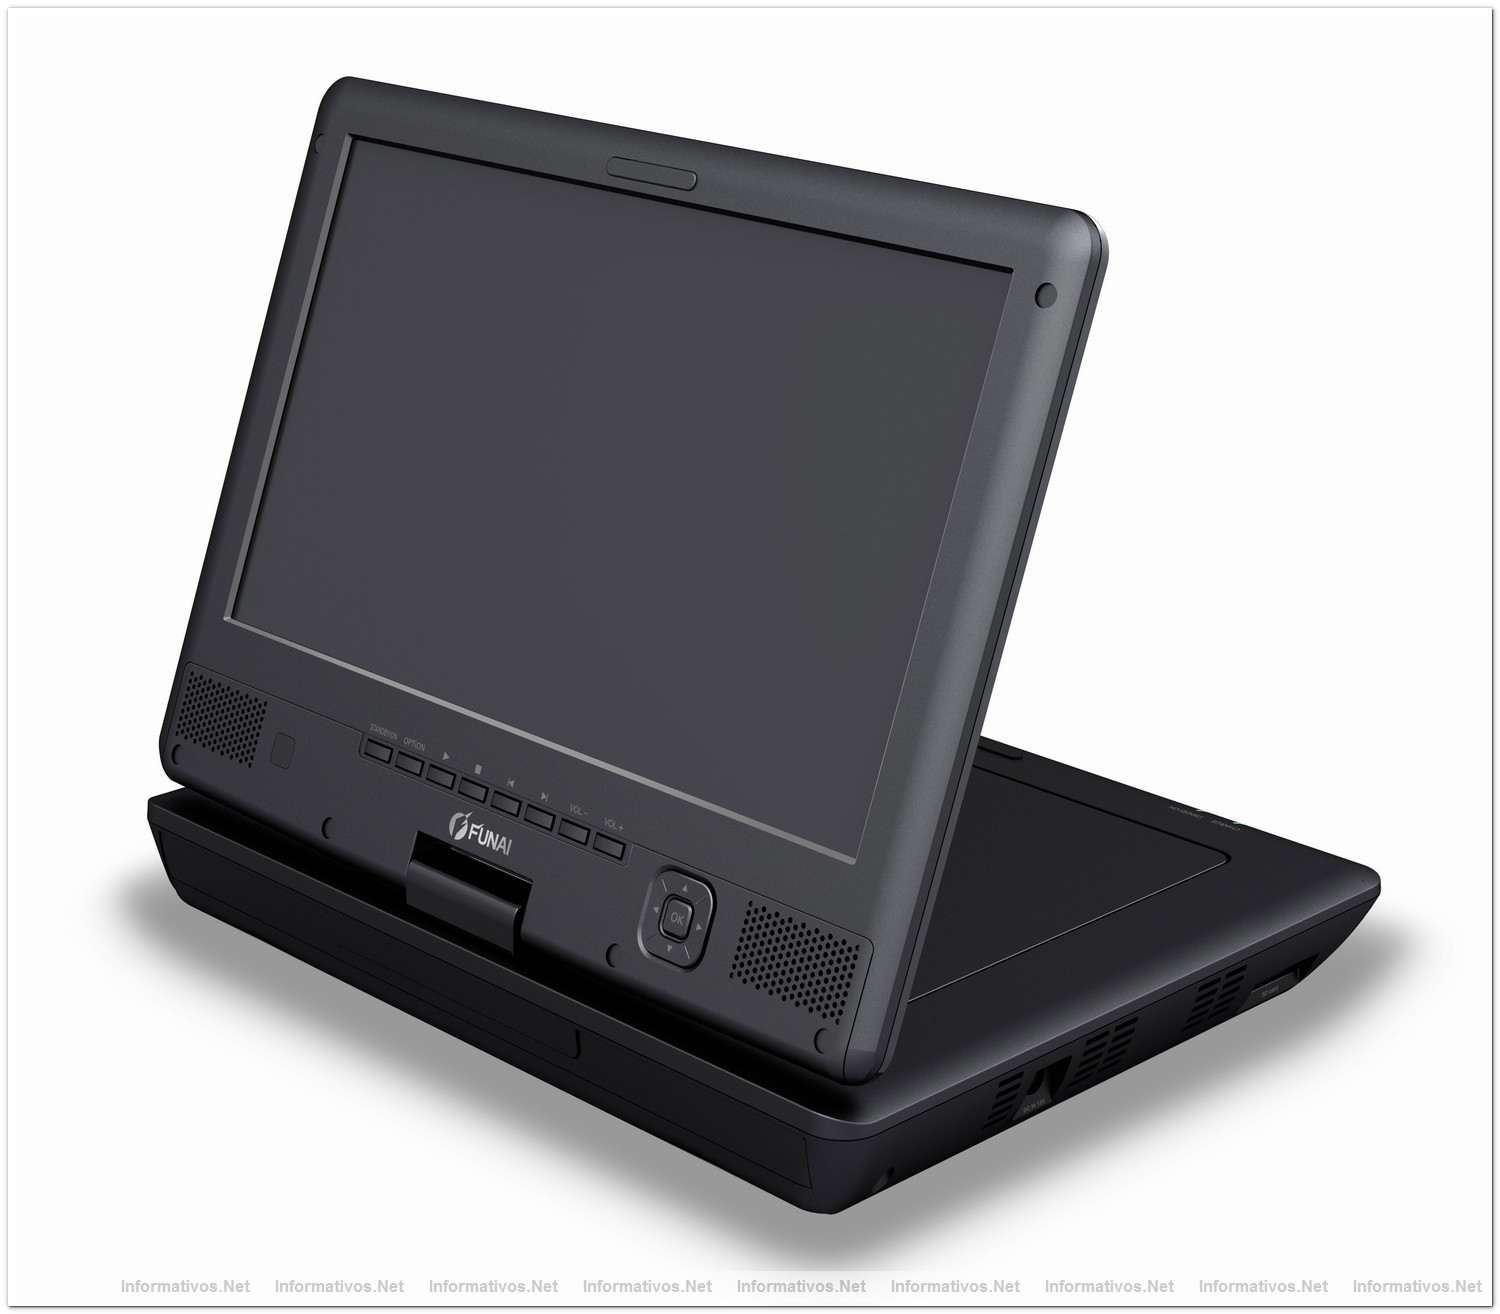 Reproductor porttil Blu-ray PB1-M200 con pantalla LCD de 10,1'' (25cm) que gira 180 y  una resolucin de 1024x600.